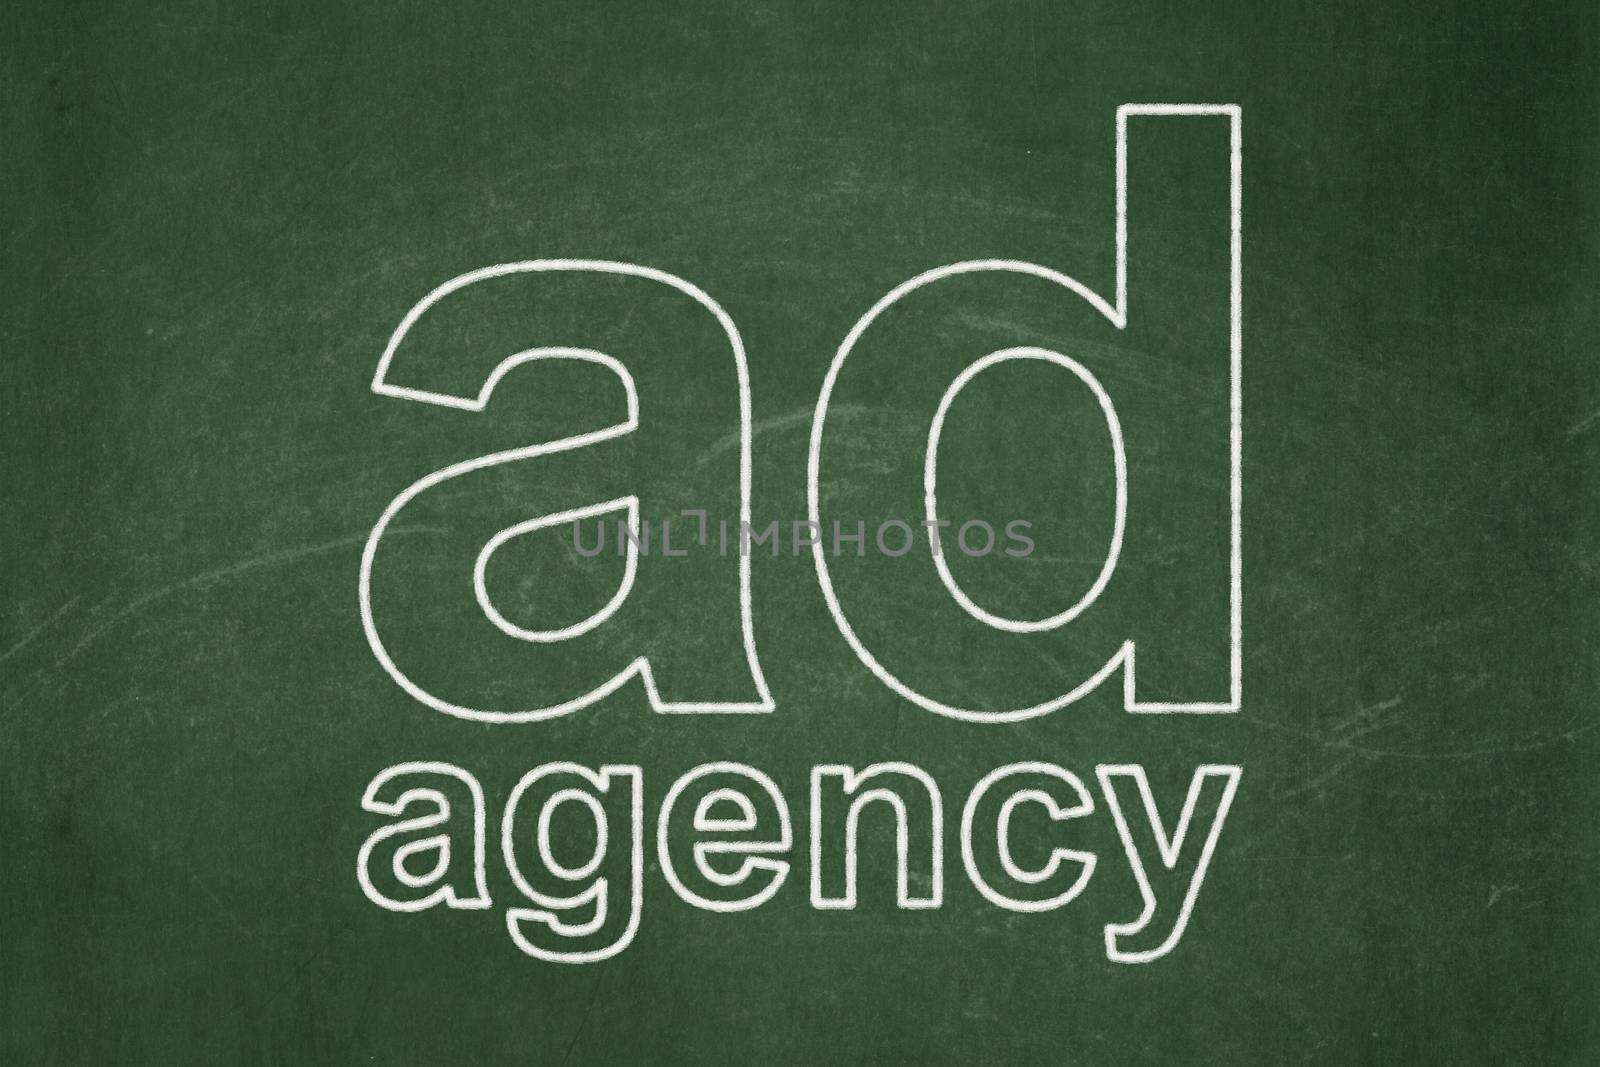 Marketing concept: Ad Agency on chalkboard background by maxkabakov